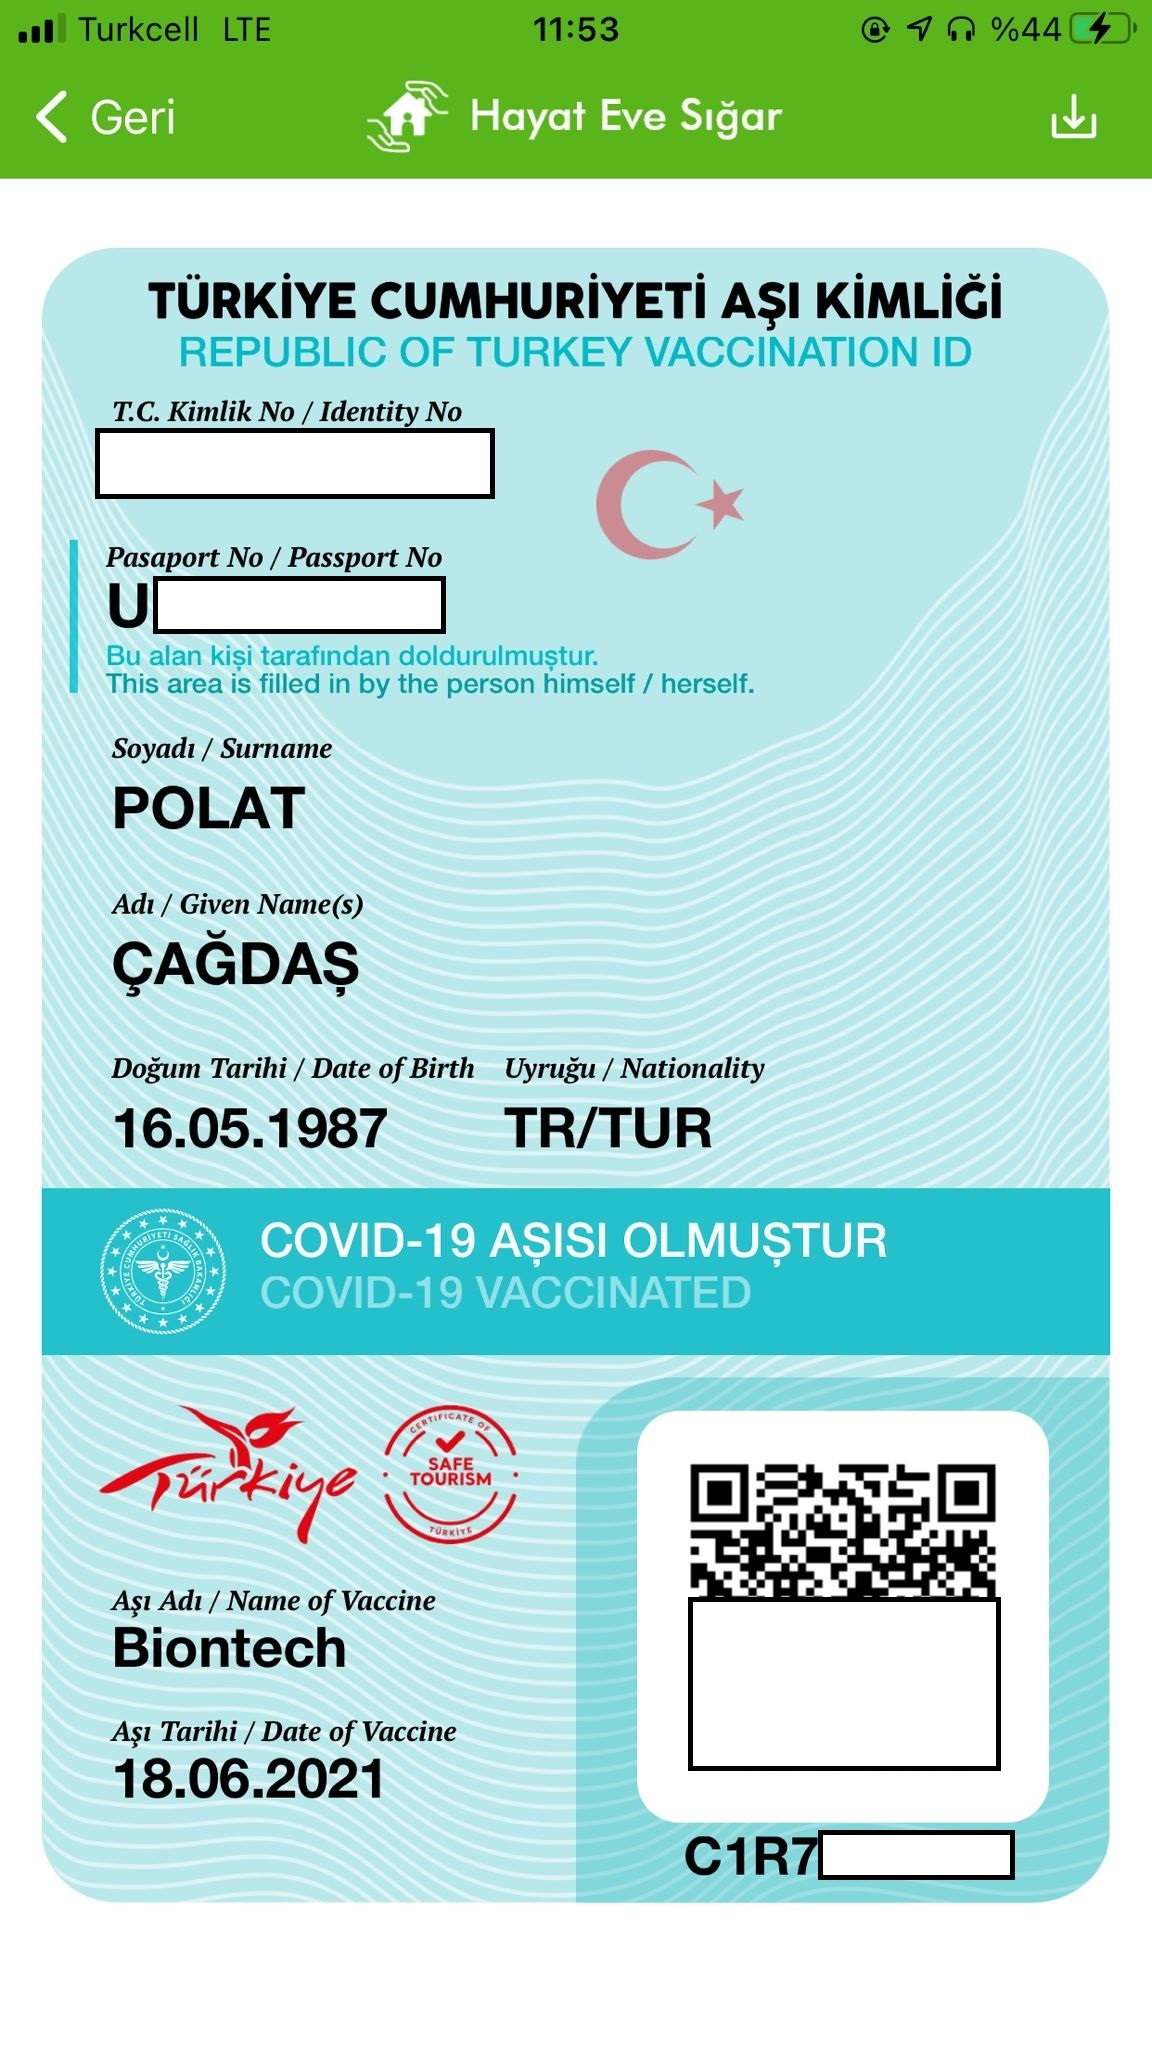 asi sertifikasi nedir asi pasaportu nasil olusturulur his blog